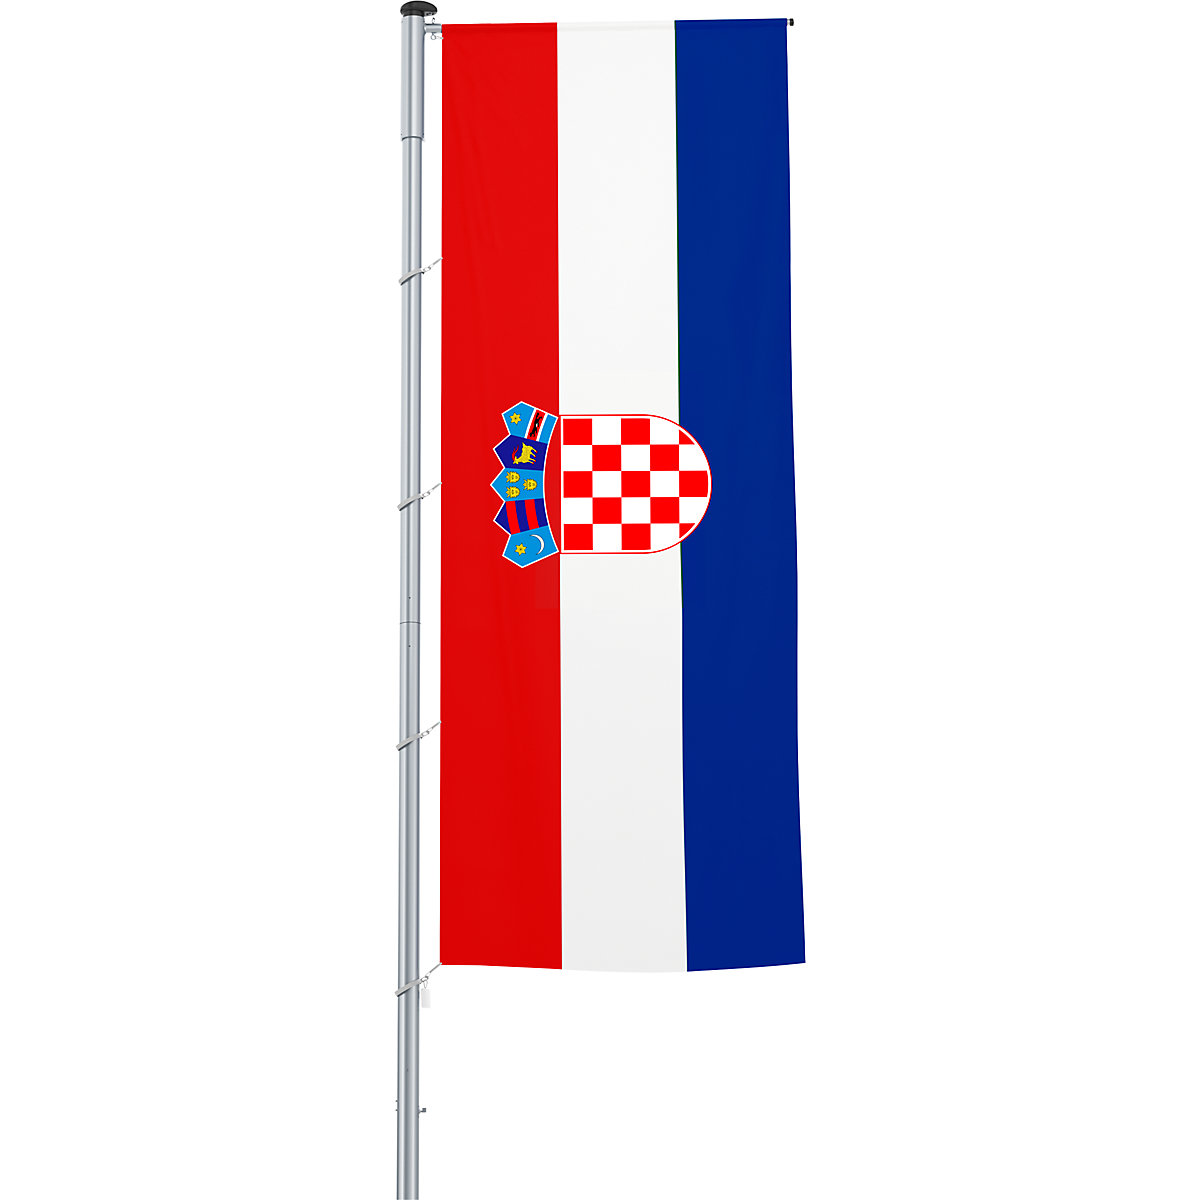 Steag pentru braț/drapel național – Mannus, format 1,2 x 3 m, Croația-23